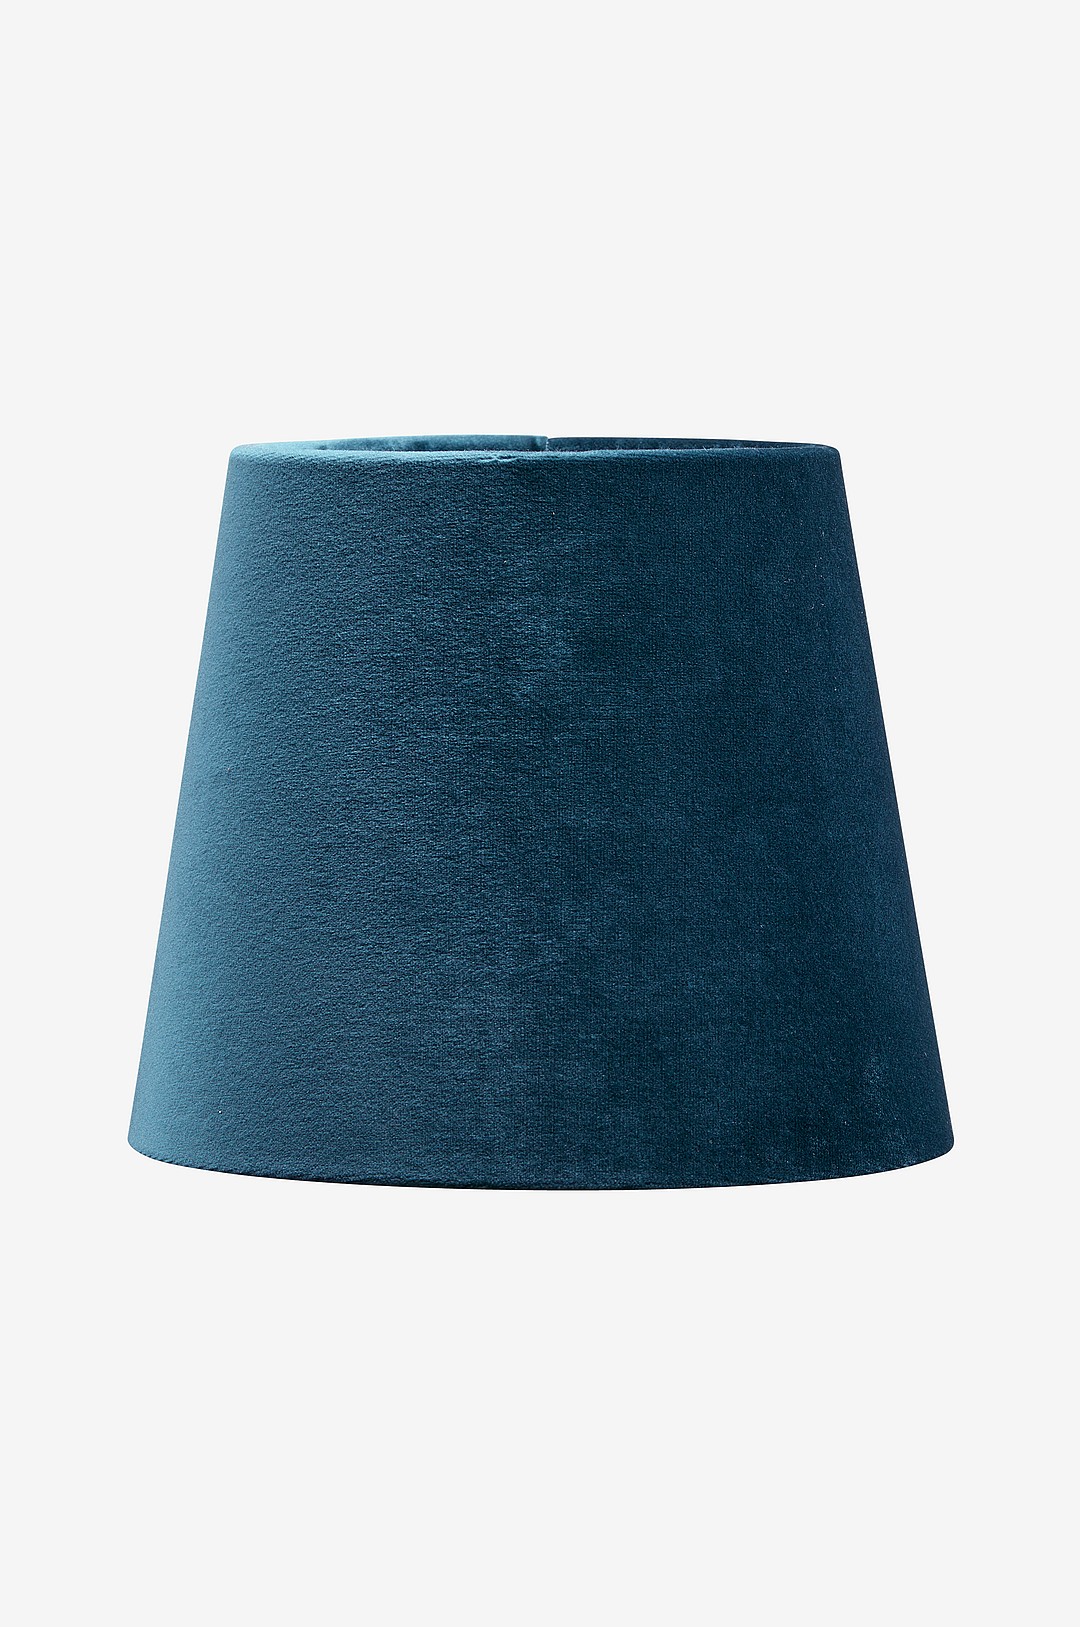 PR Home - Lampskärm Mia Sammet 20 cm - Blå